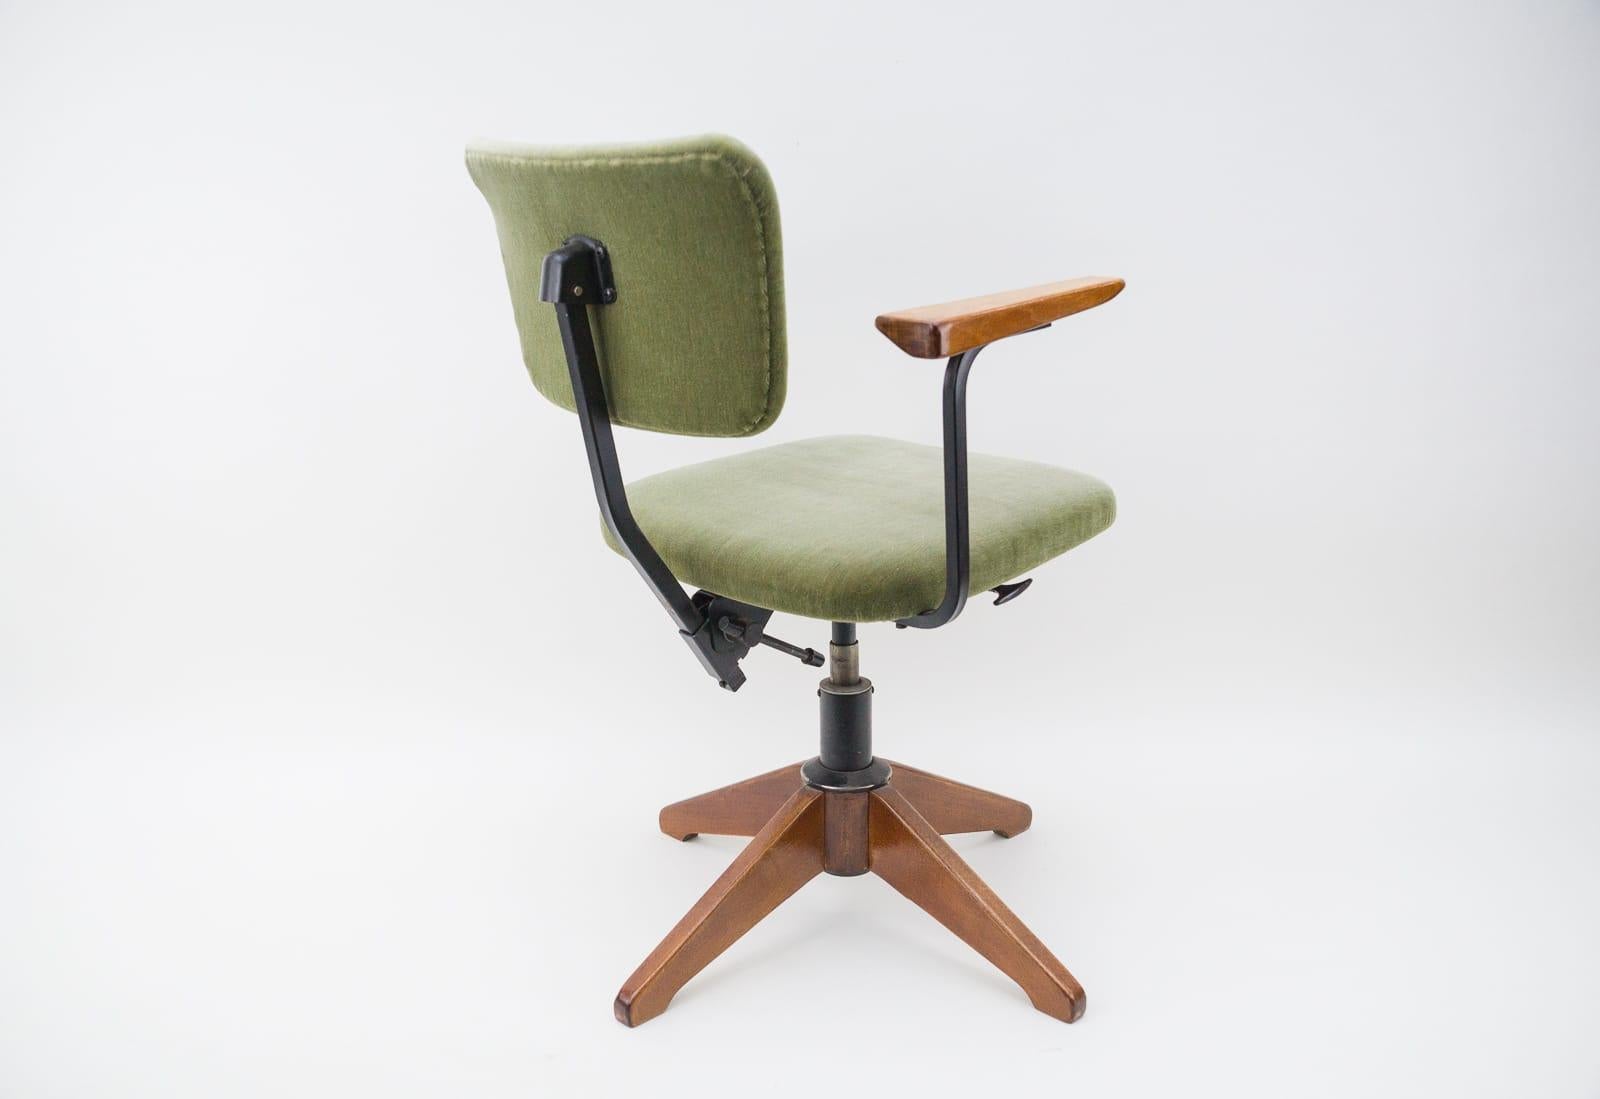 Metal Very Rare Mid-Century Modern Office Chair by Sedus, 1960s Switzerland